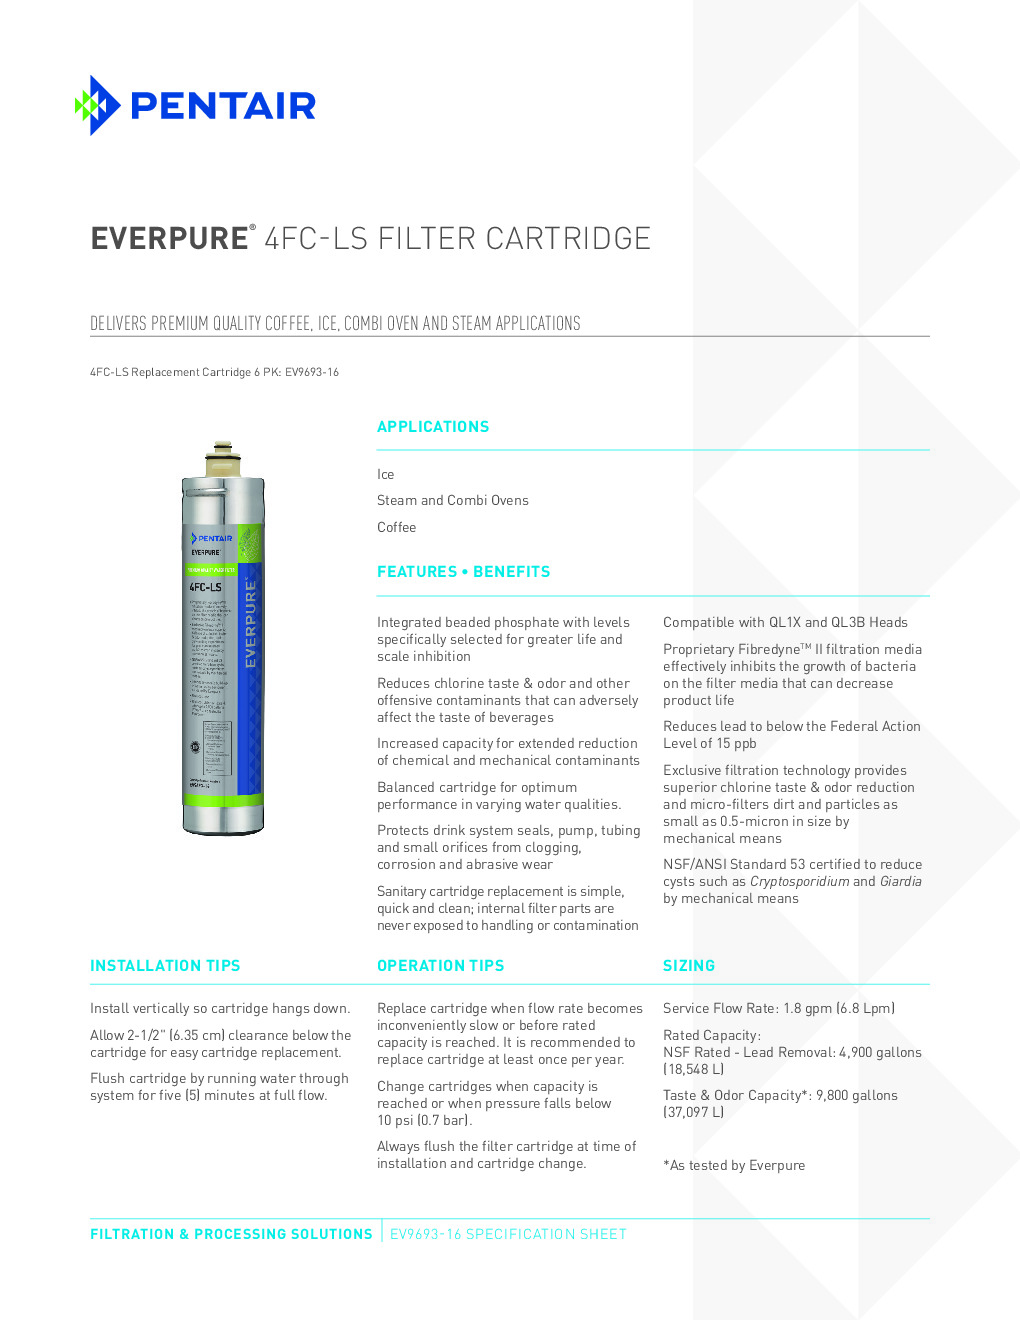 Everpure EV969316 Cartridge Water Filtration System